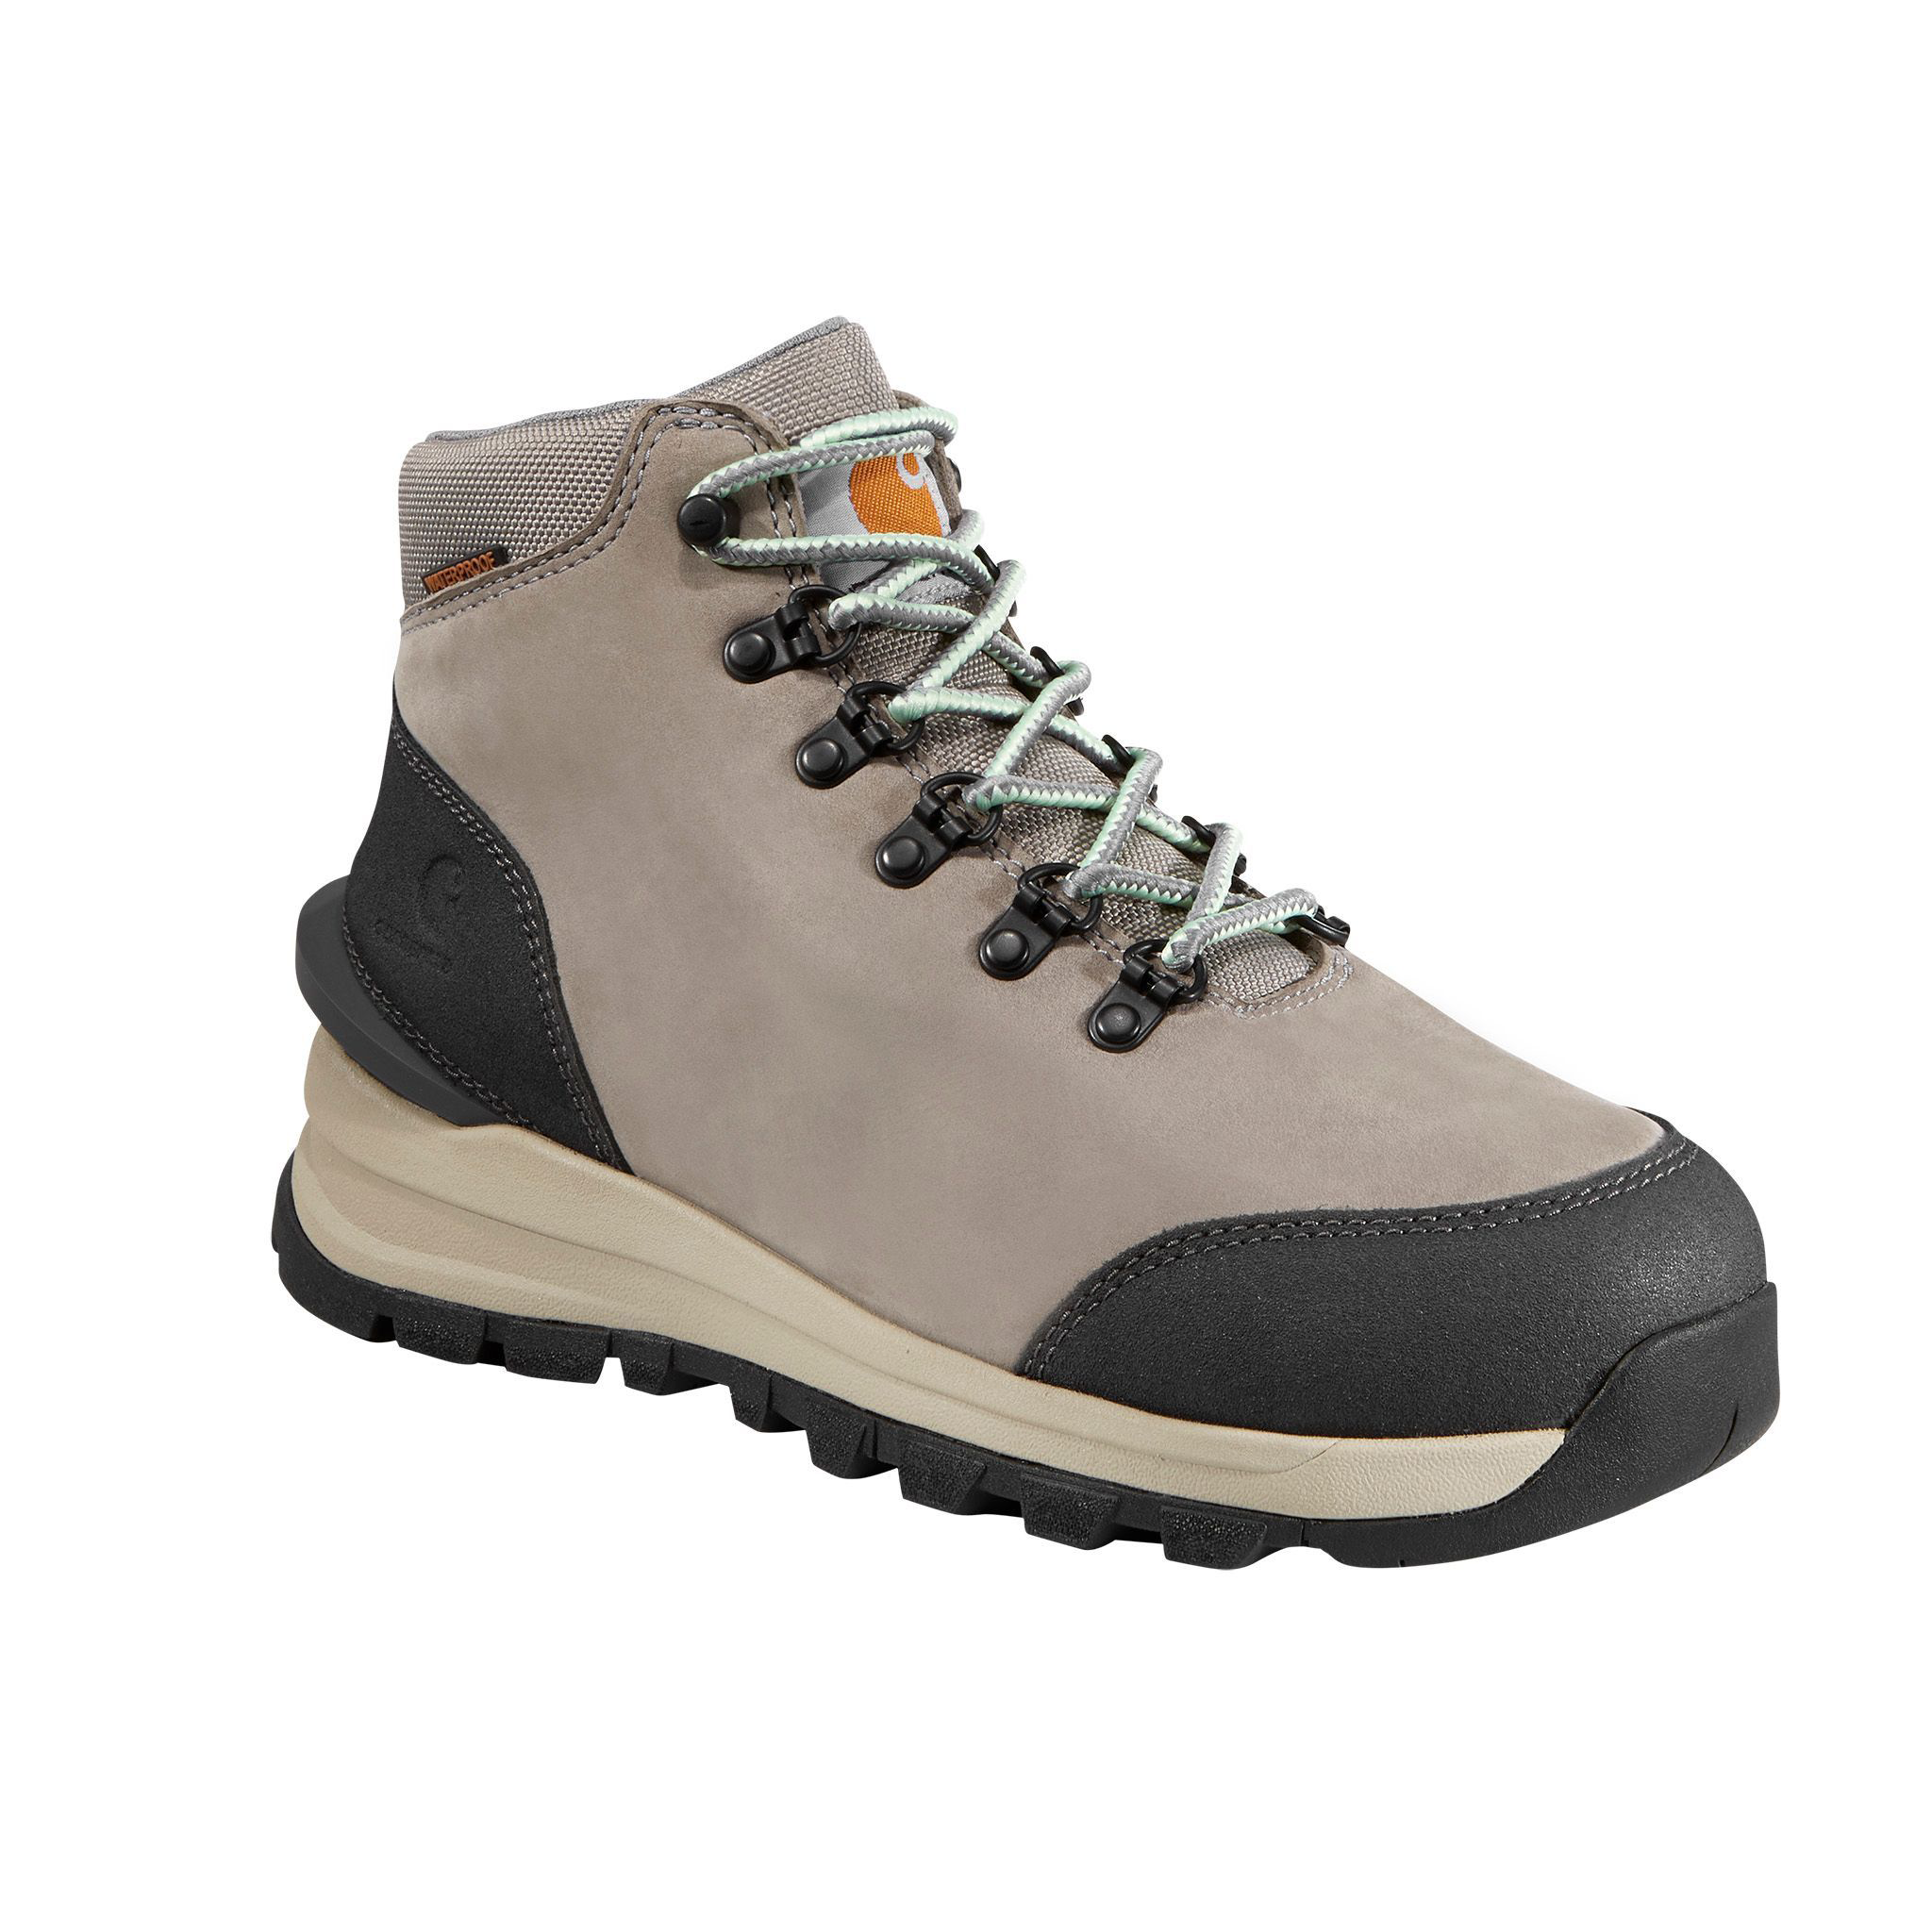 Carhartt Gilmore Waterproof Hiking Boots for Ladies - Grey Nubuck - 8.5M